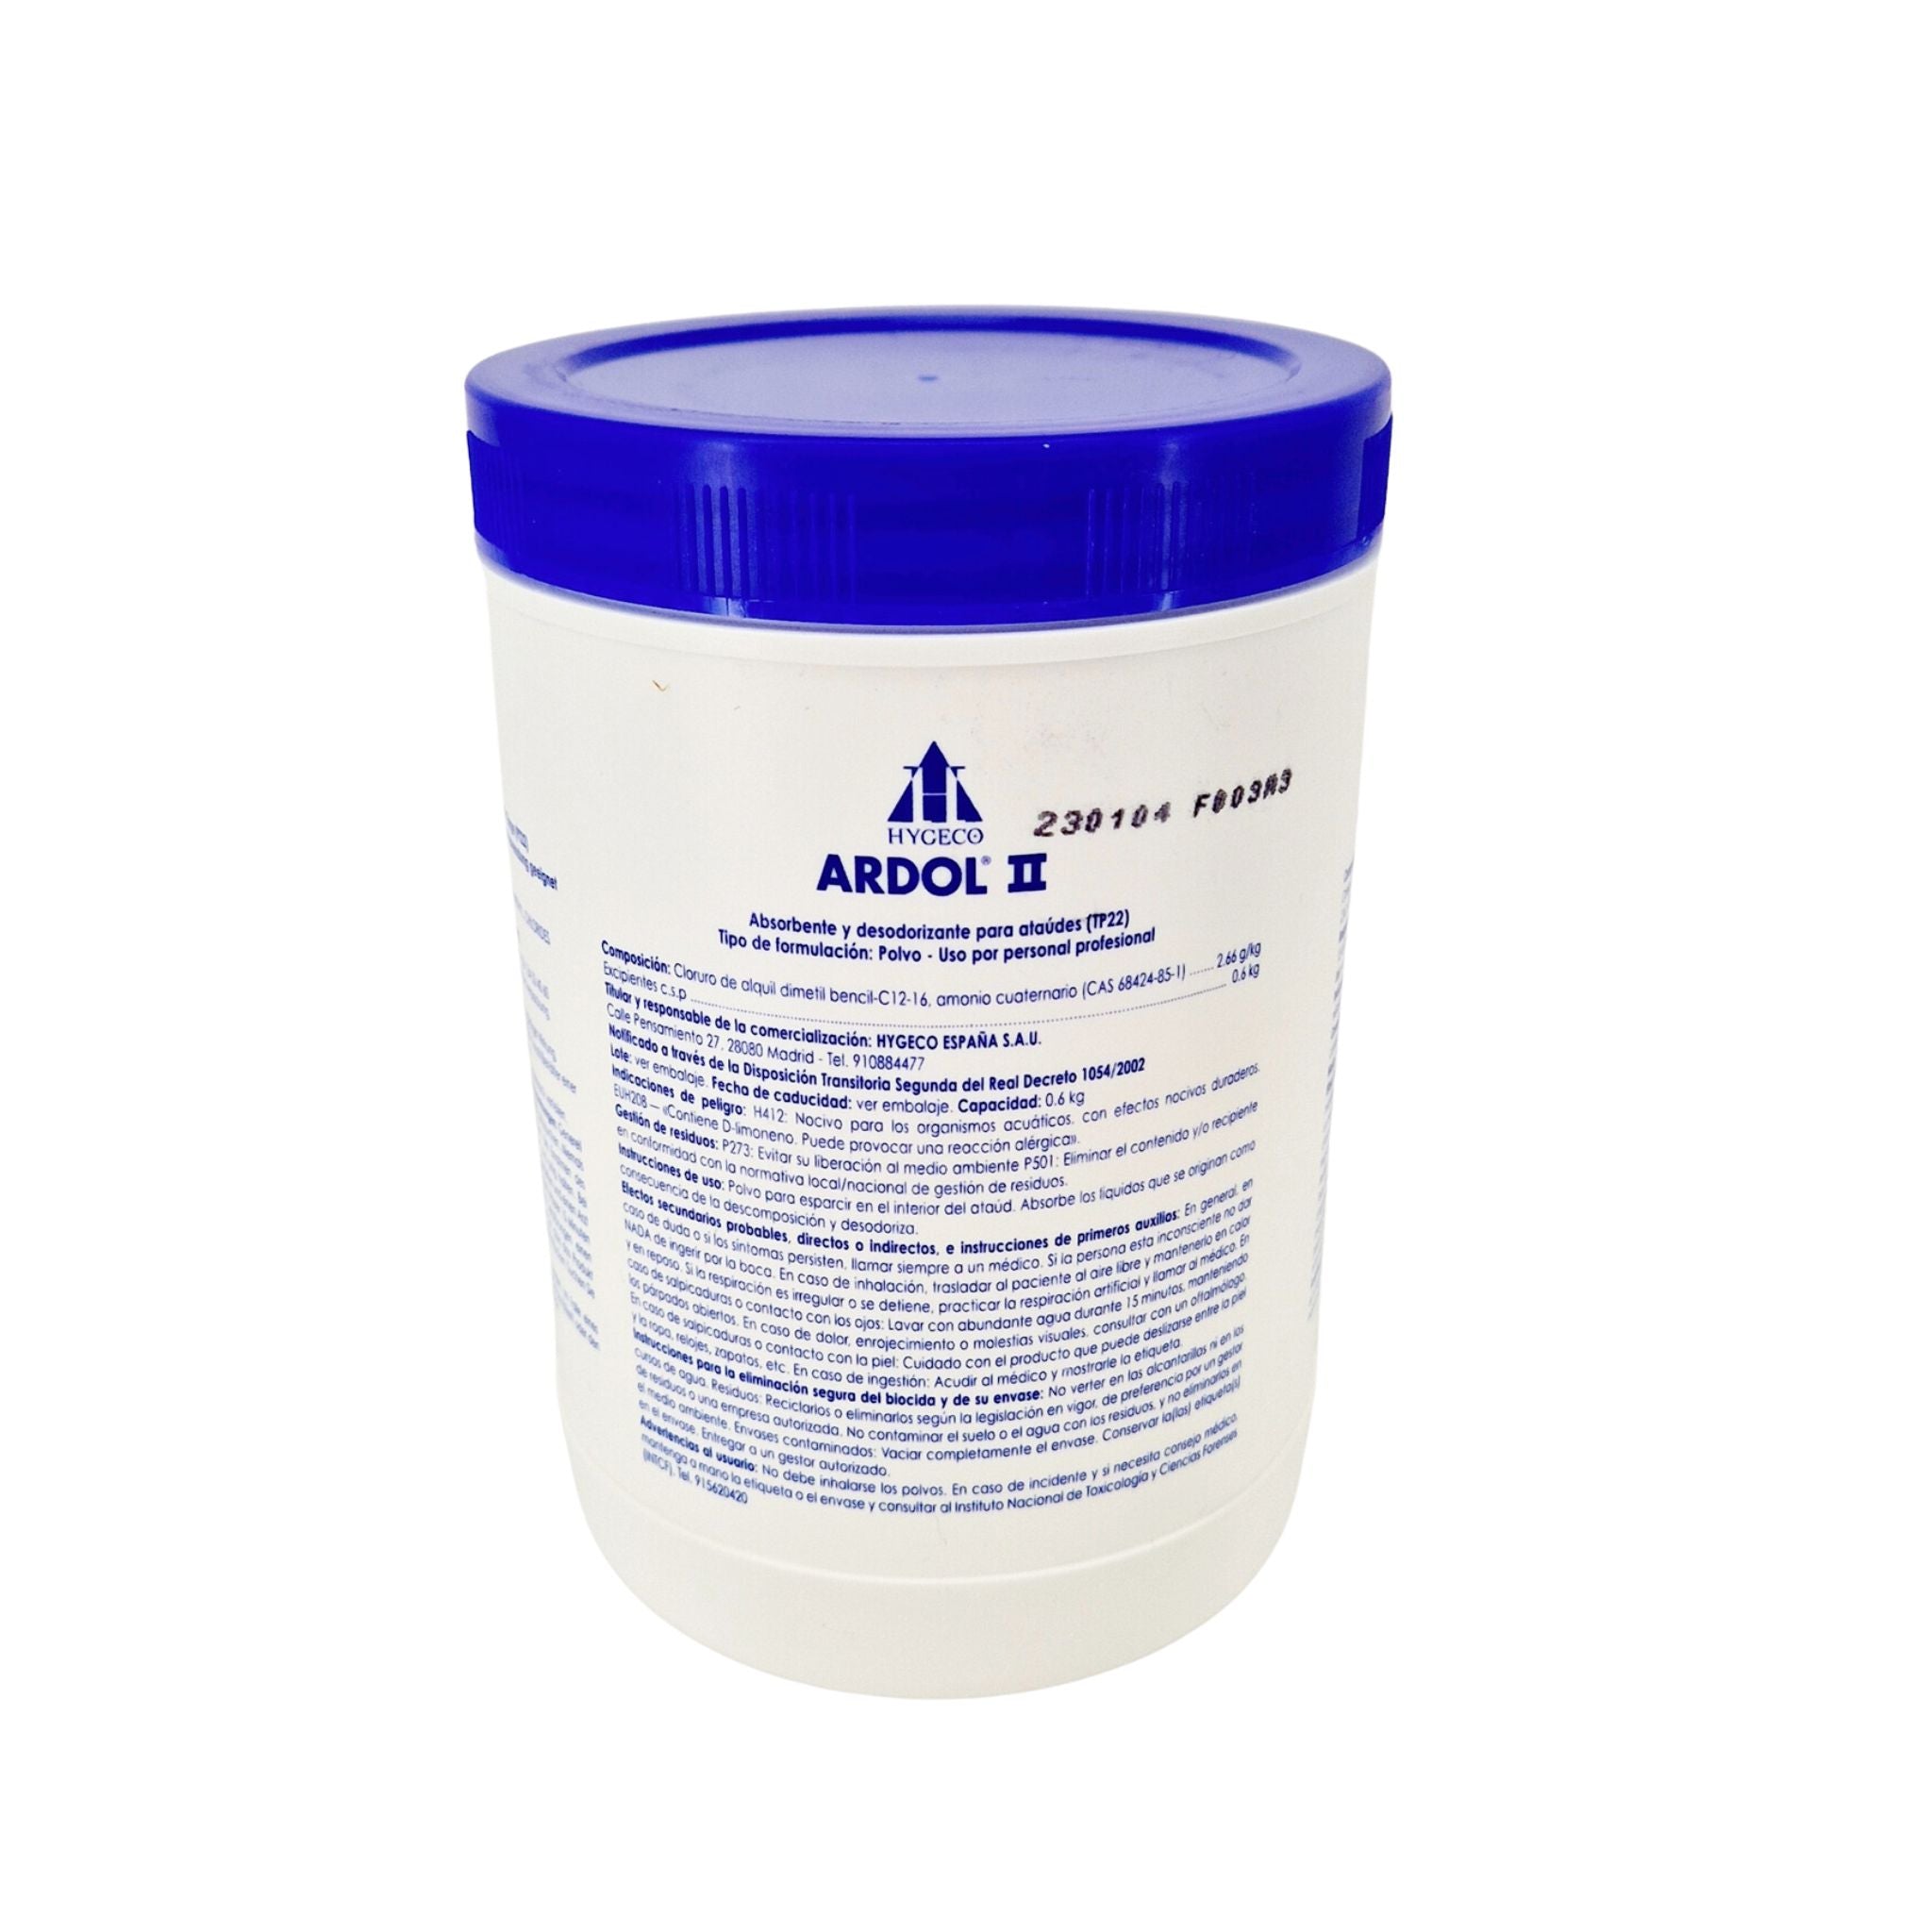 Ardol II coffin litter for odor control